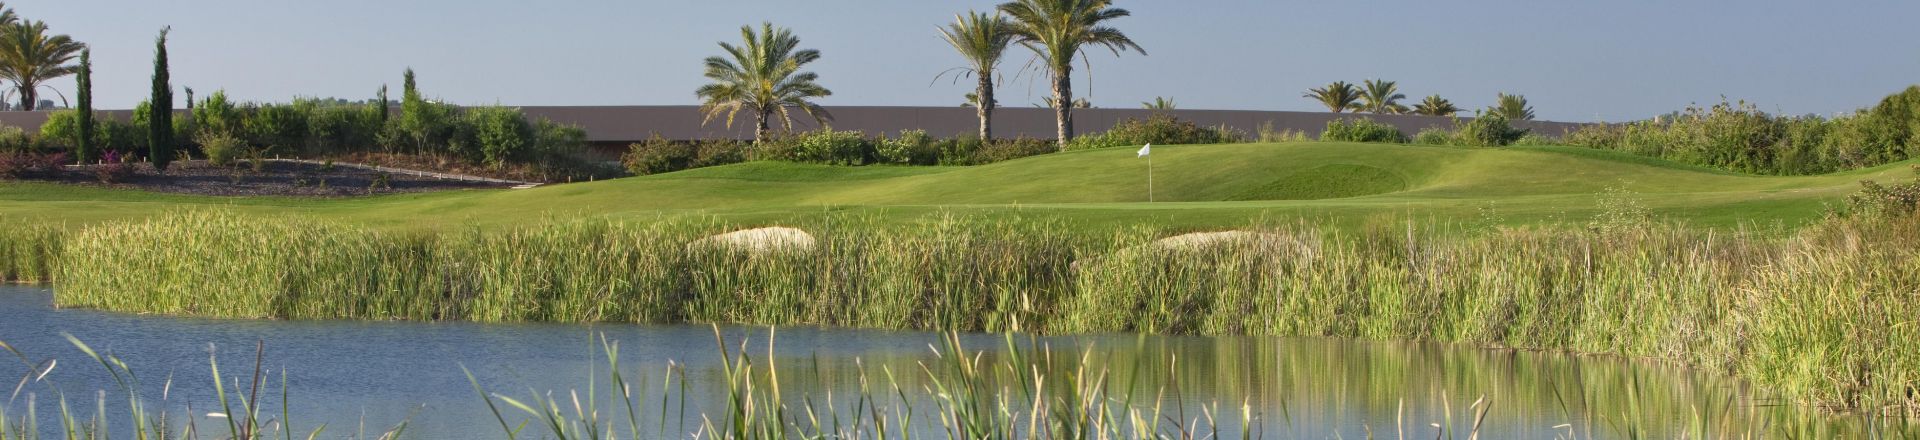 O'Connor Course at Amendoeira Golf Resort, Algarve